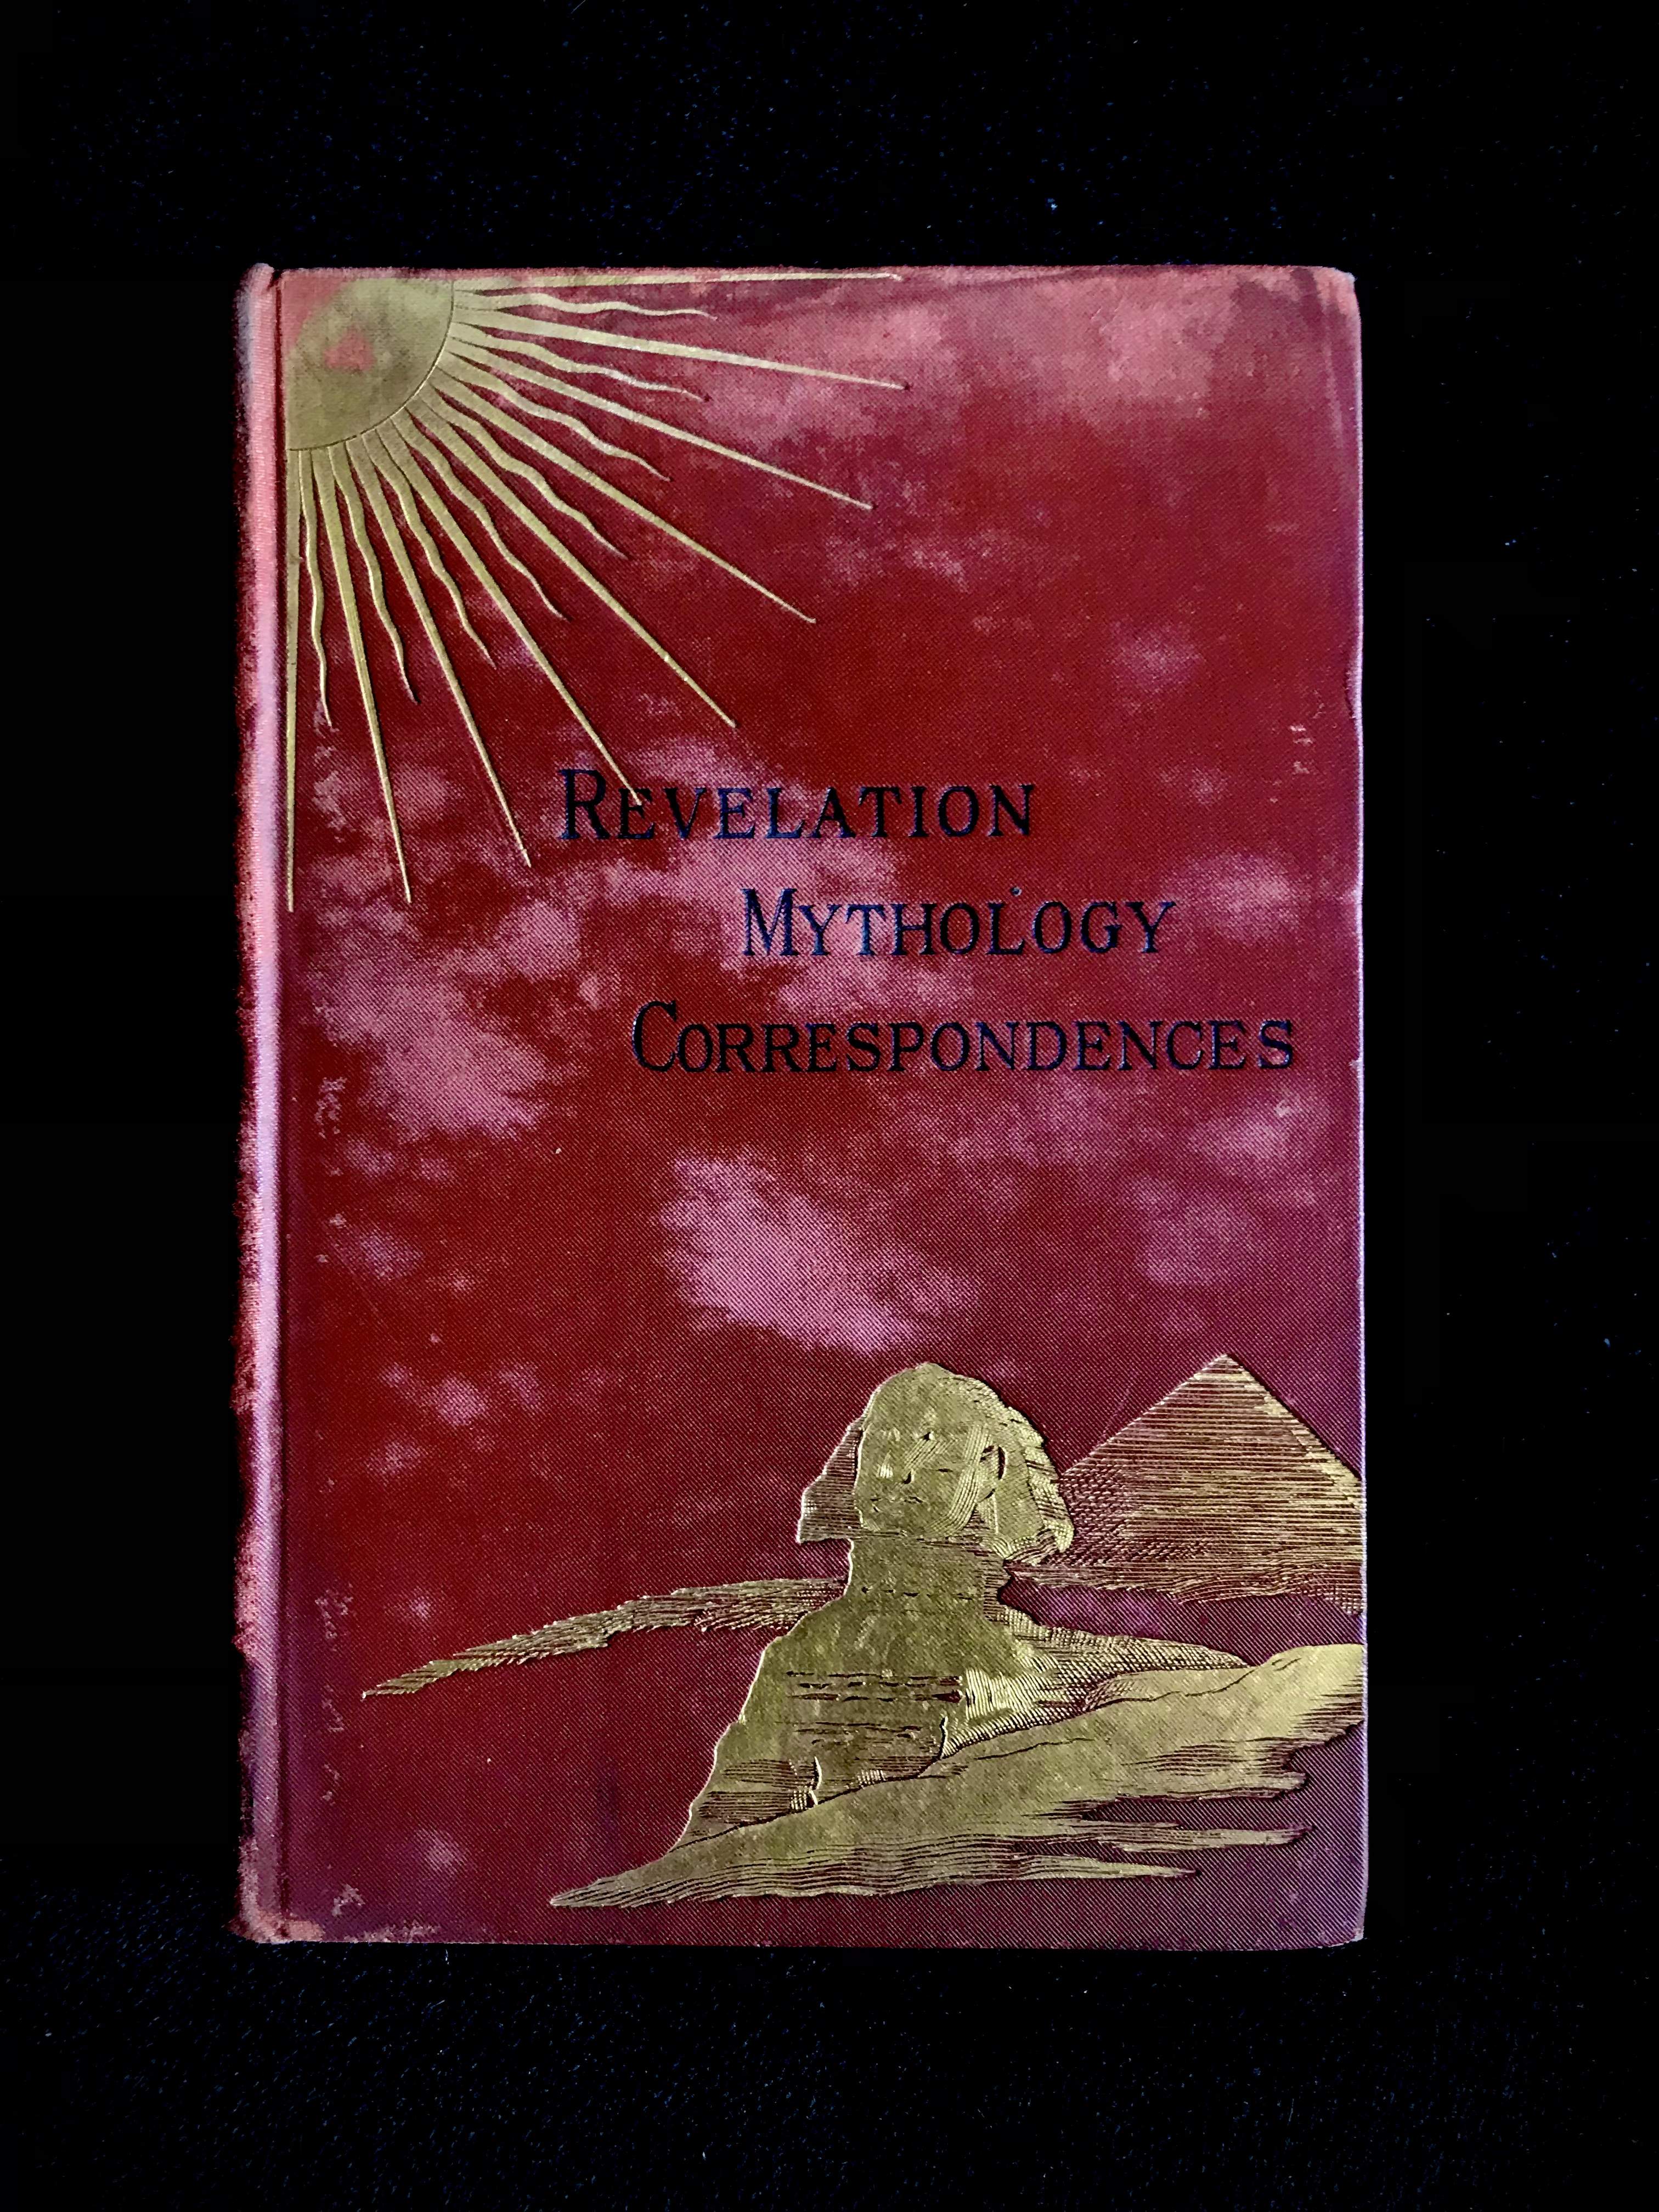 Revelation, Mythology, Correspondences J. J. G. Wilkinson